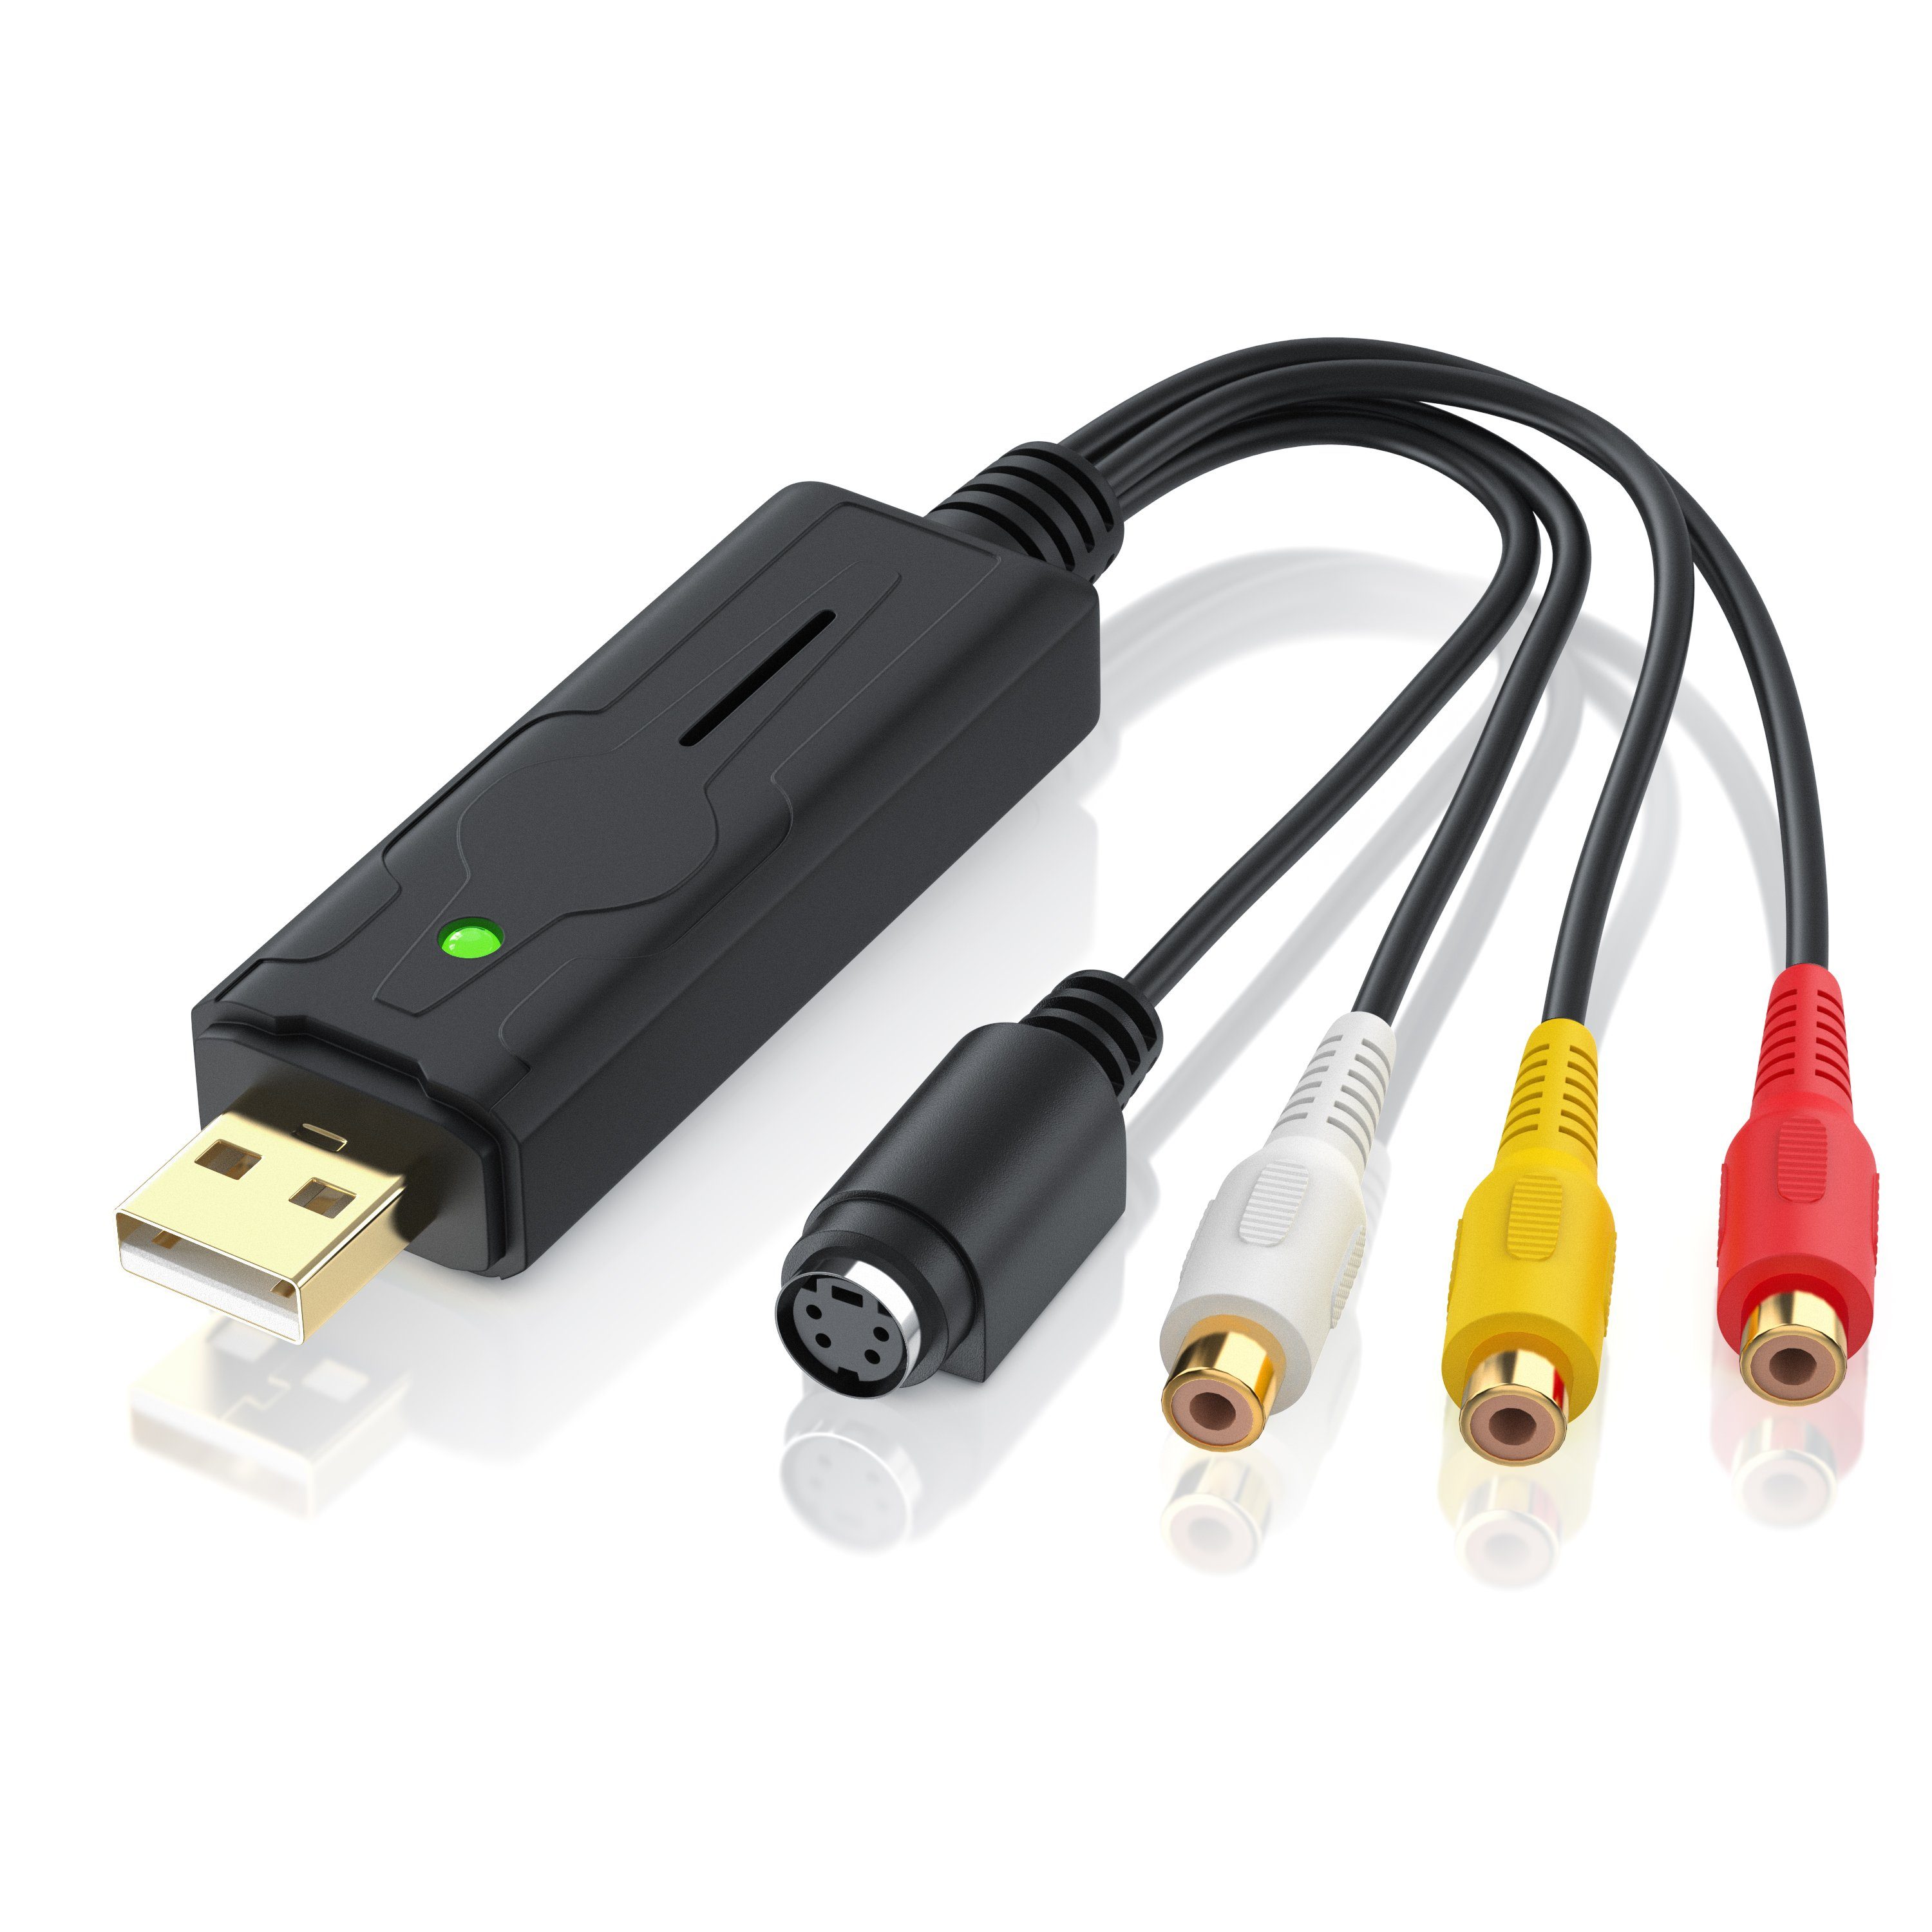 Aplic Audio- & Video-Adapter zu USB 2.0 auf S-Video Buchse, Composite CVBS  Buchse, 2x Cinch Buchse, 15 cm, USB Audio Video Grabber - VHS -  Videoadapter zur Bearbeitung